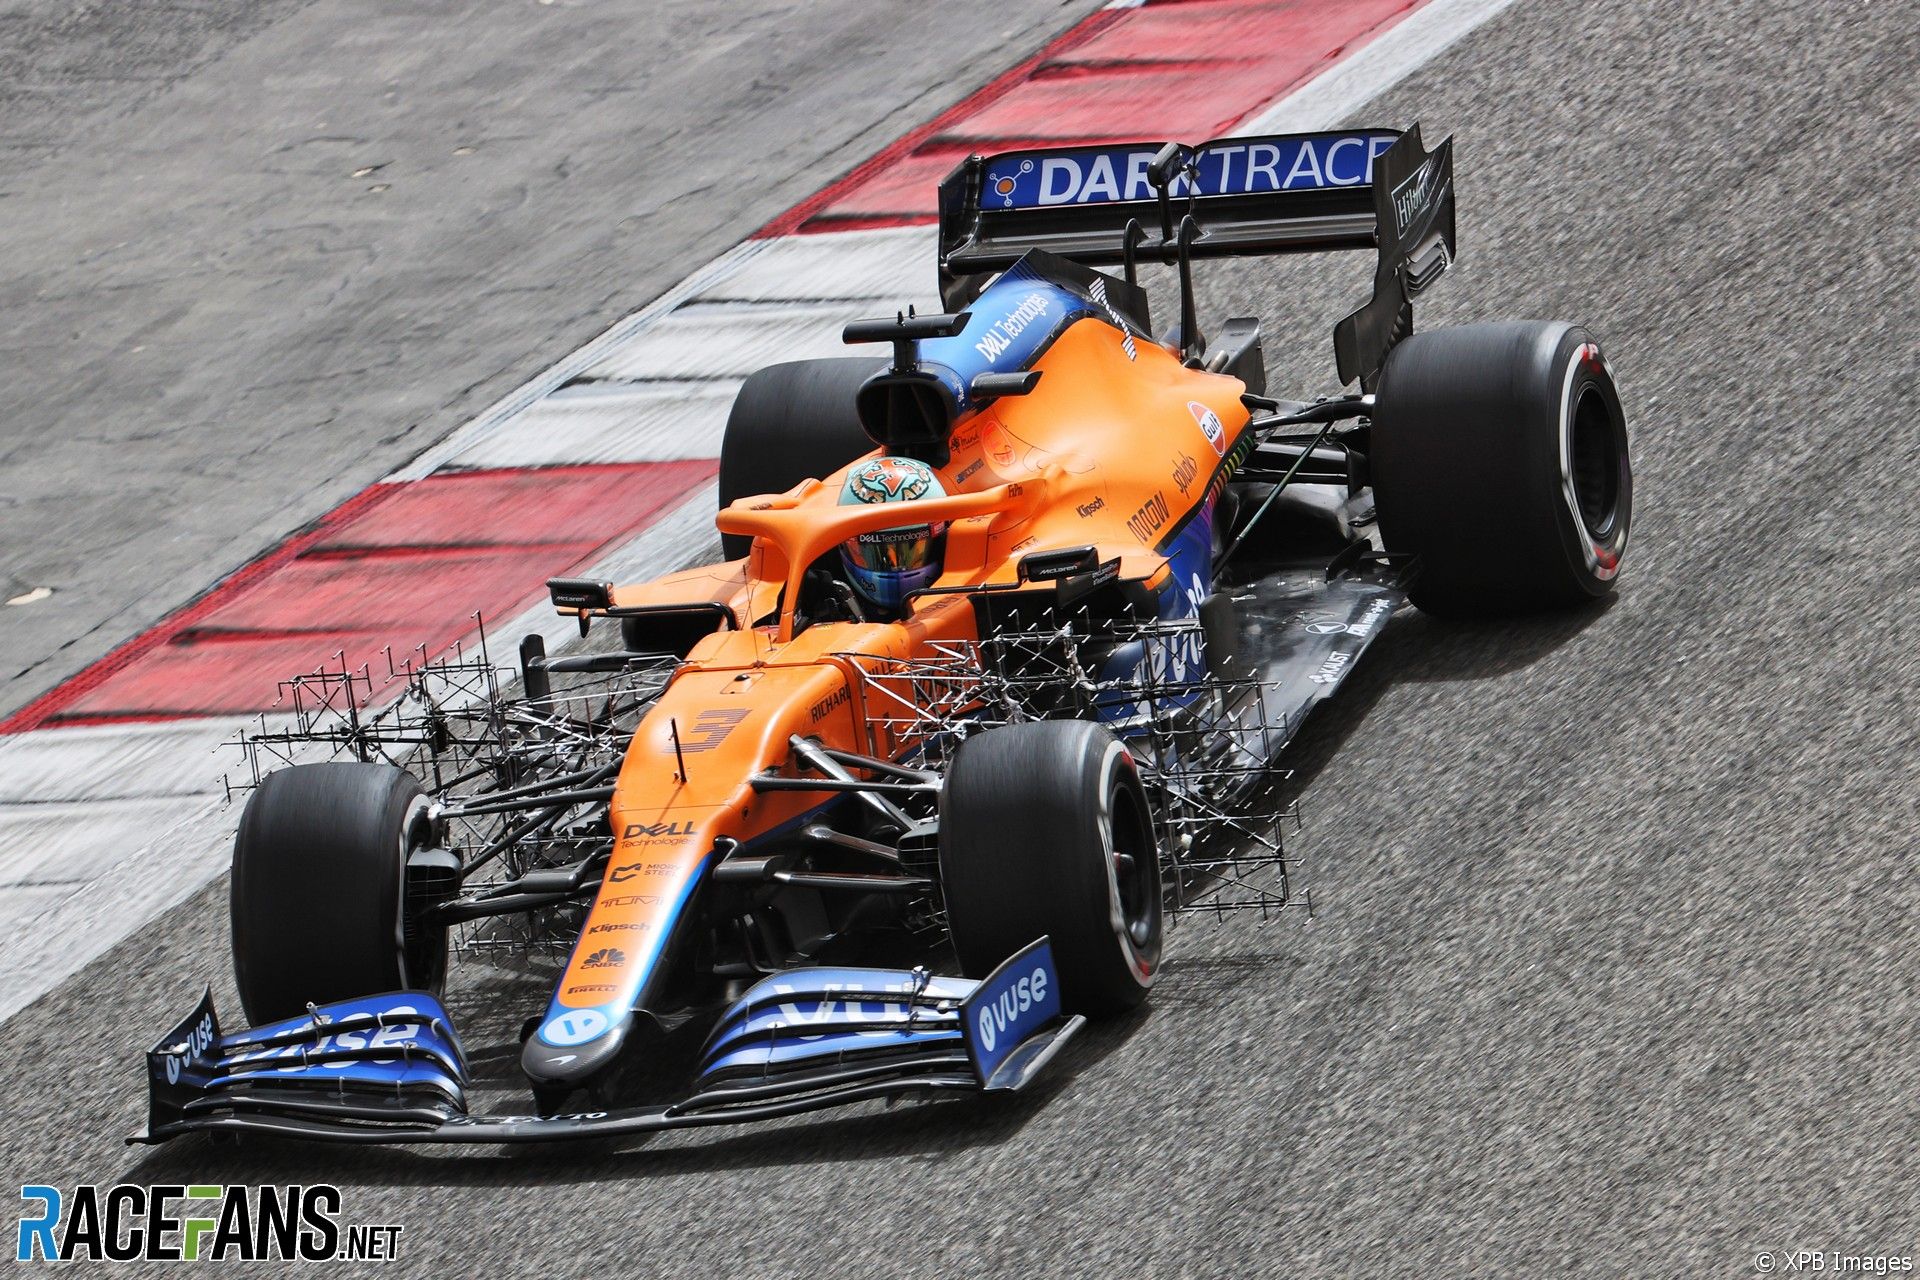 Daniel Ricciardo, McLaren, Bahrain International Circuit, 2021 · RaceFans